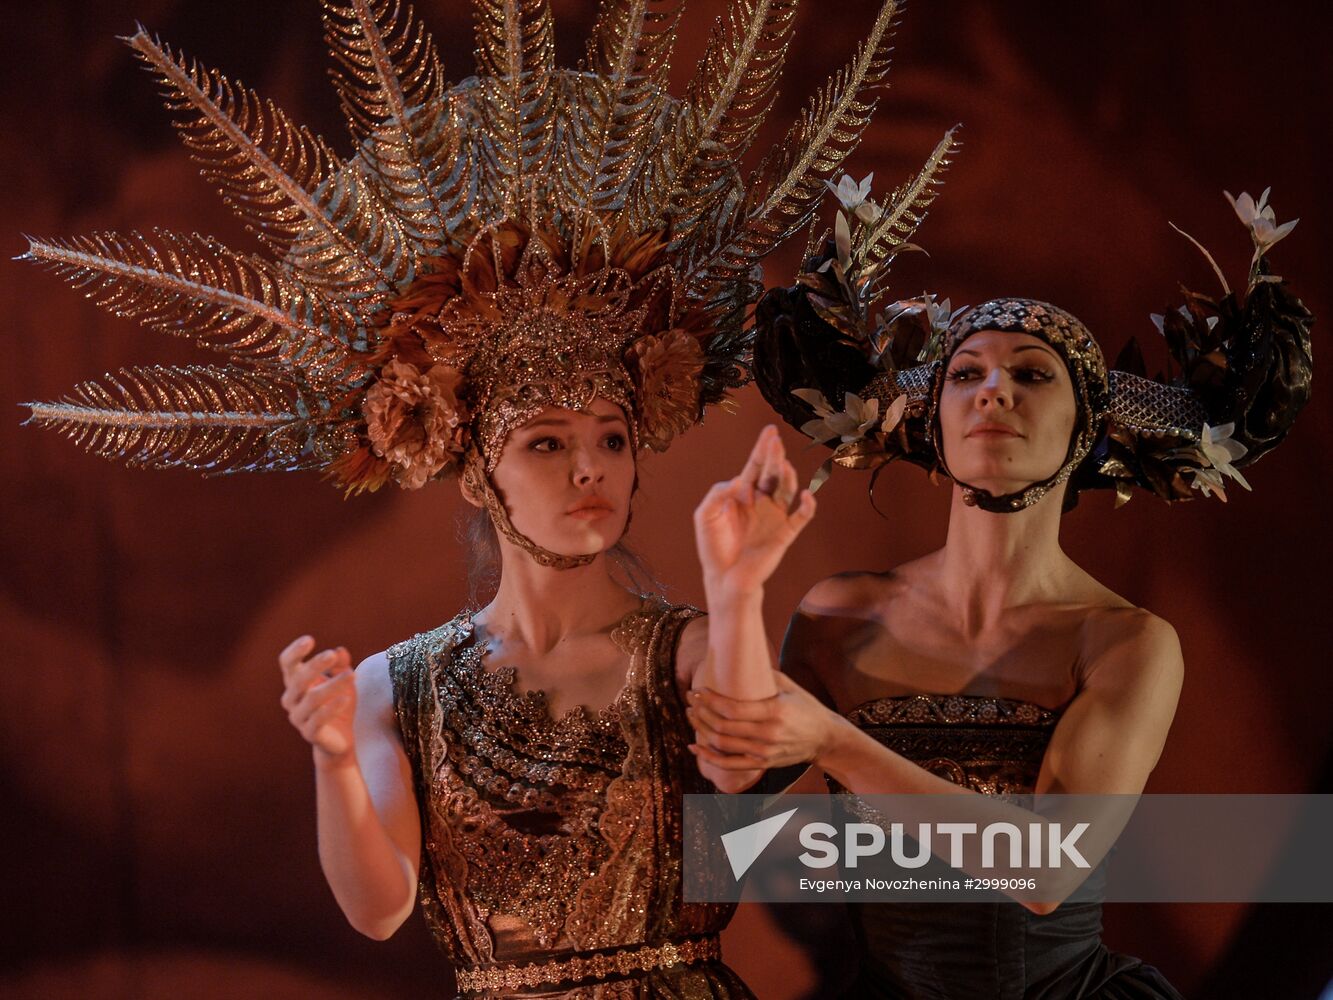 Pre-premiere of Caligula by Sergei Zemlyansky